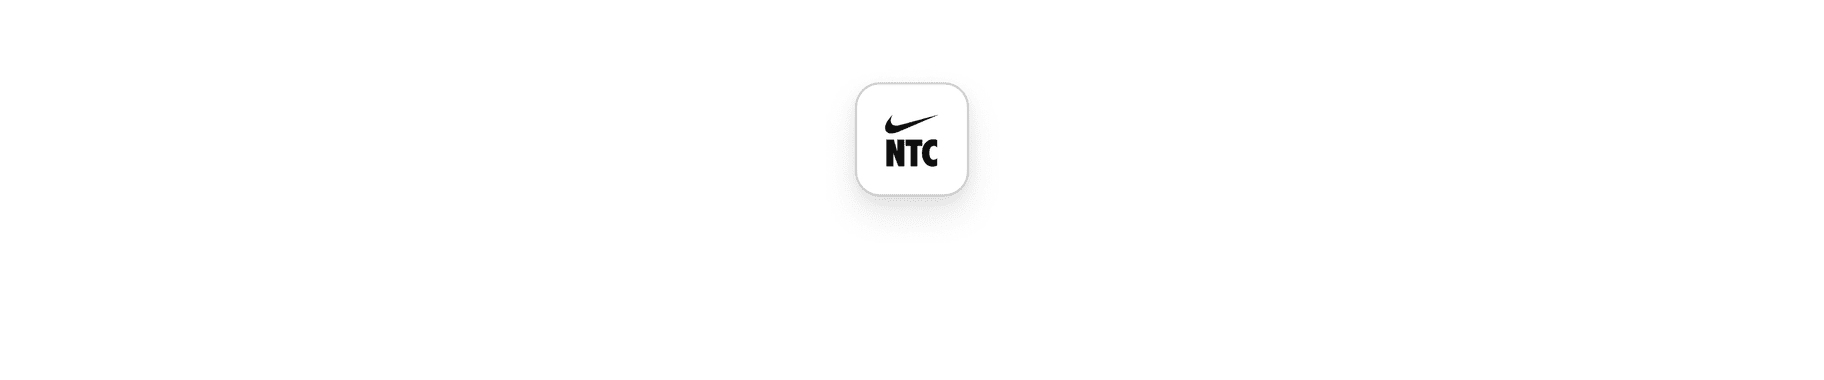 Nike Member Benefits: Sport and Wellness Apps. Nike.com